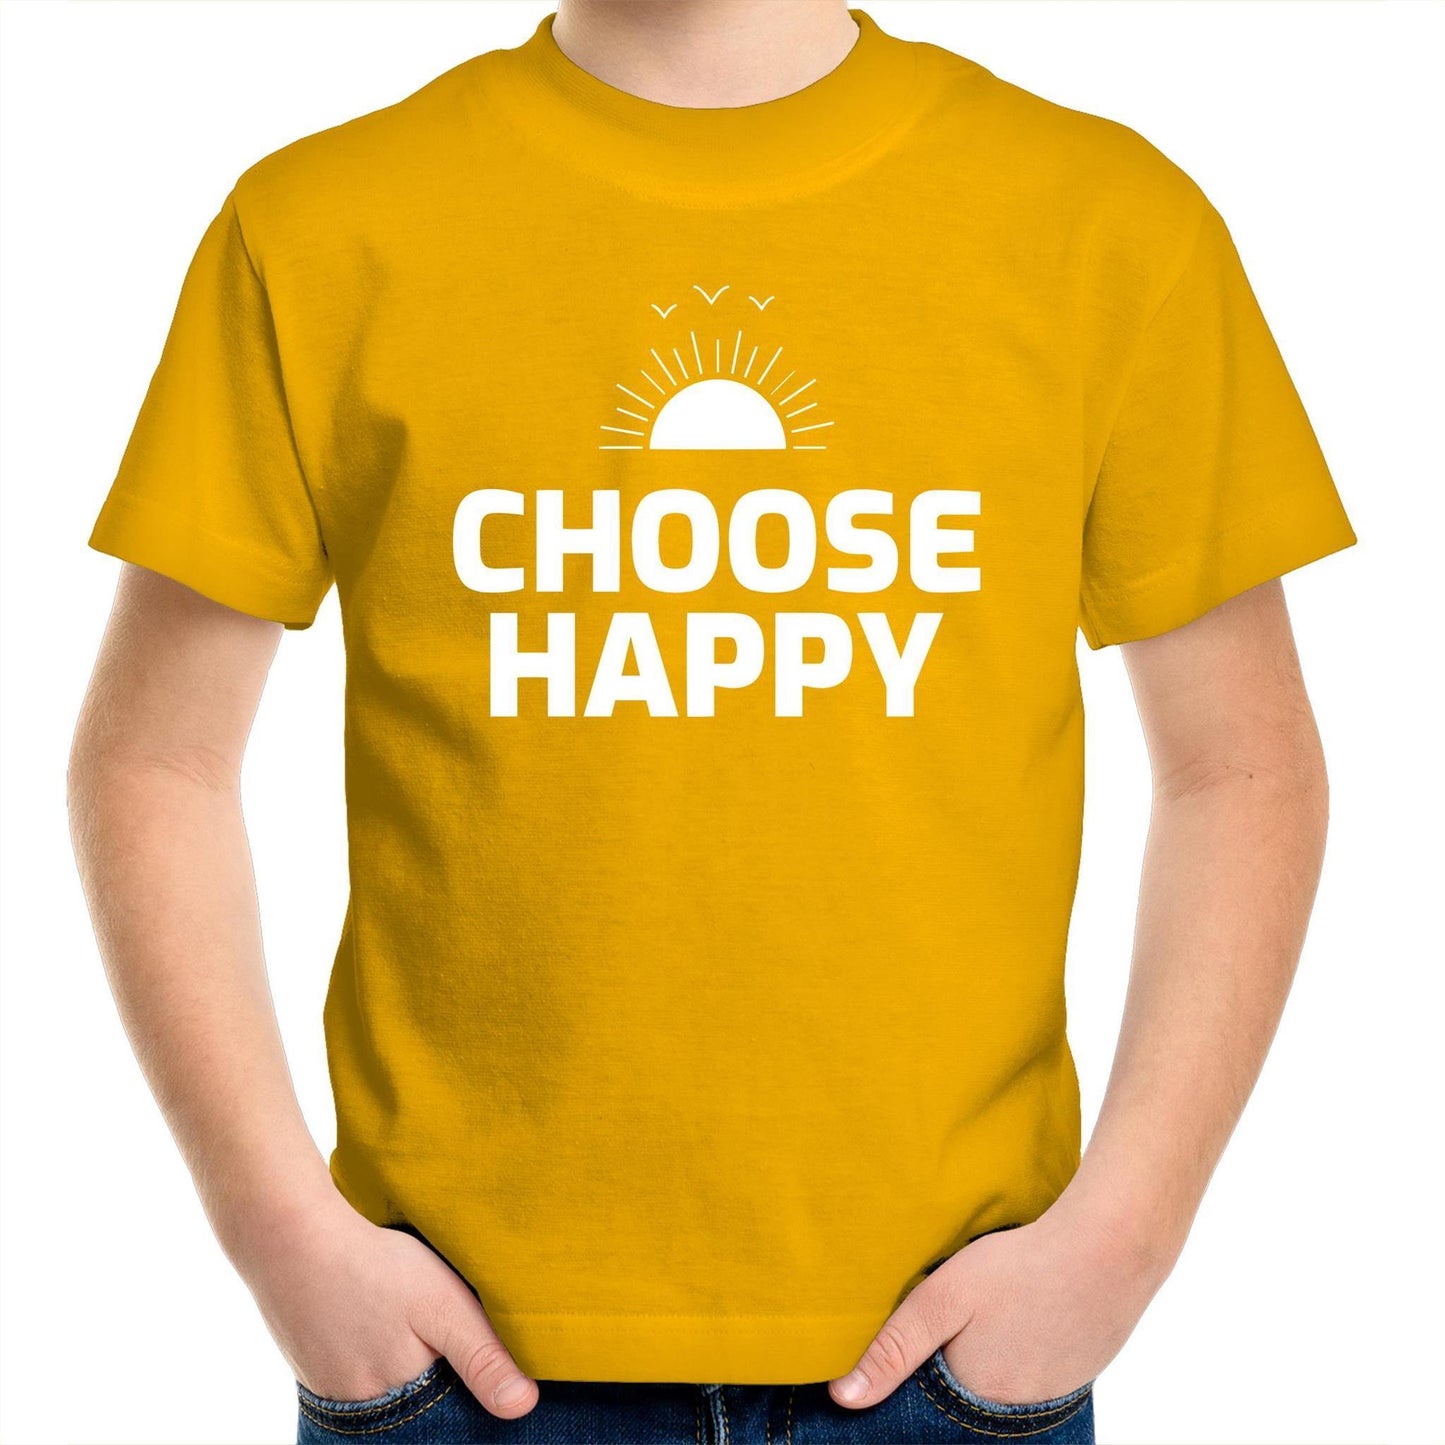 Choose Happy - Kids Youth Crew T-Shirt Gold Kids Youth T-shirt